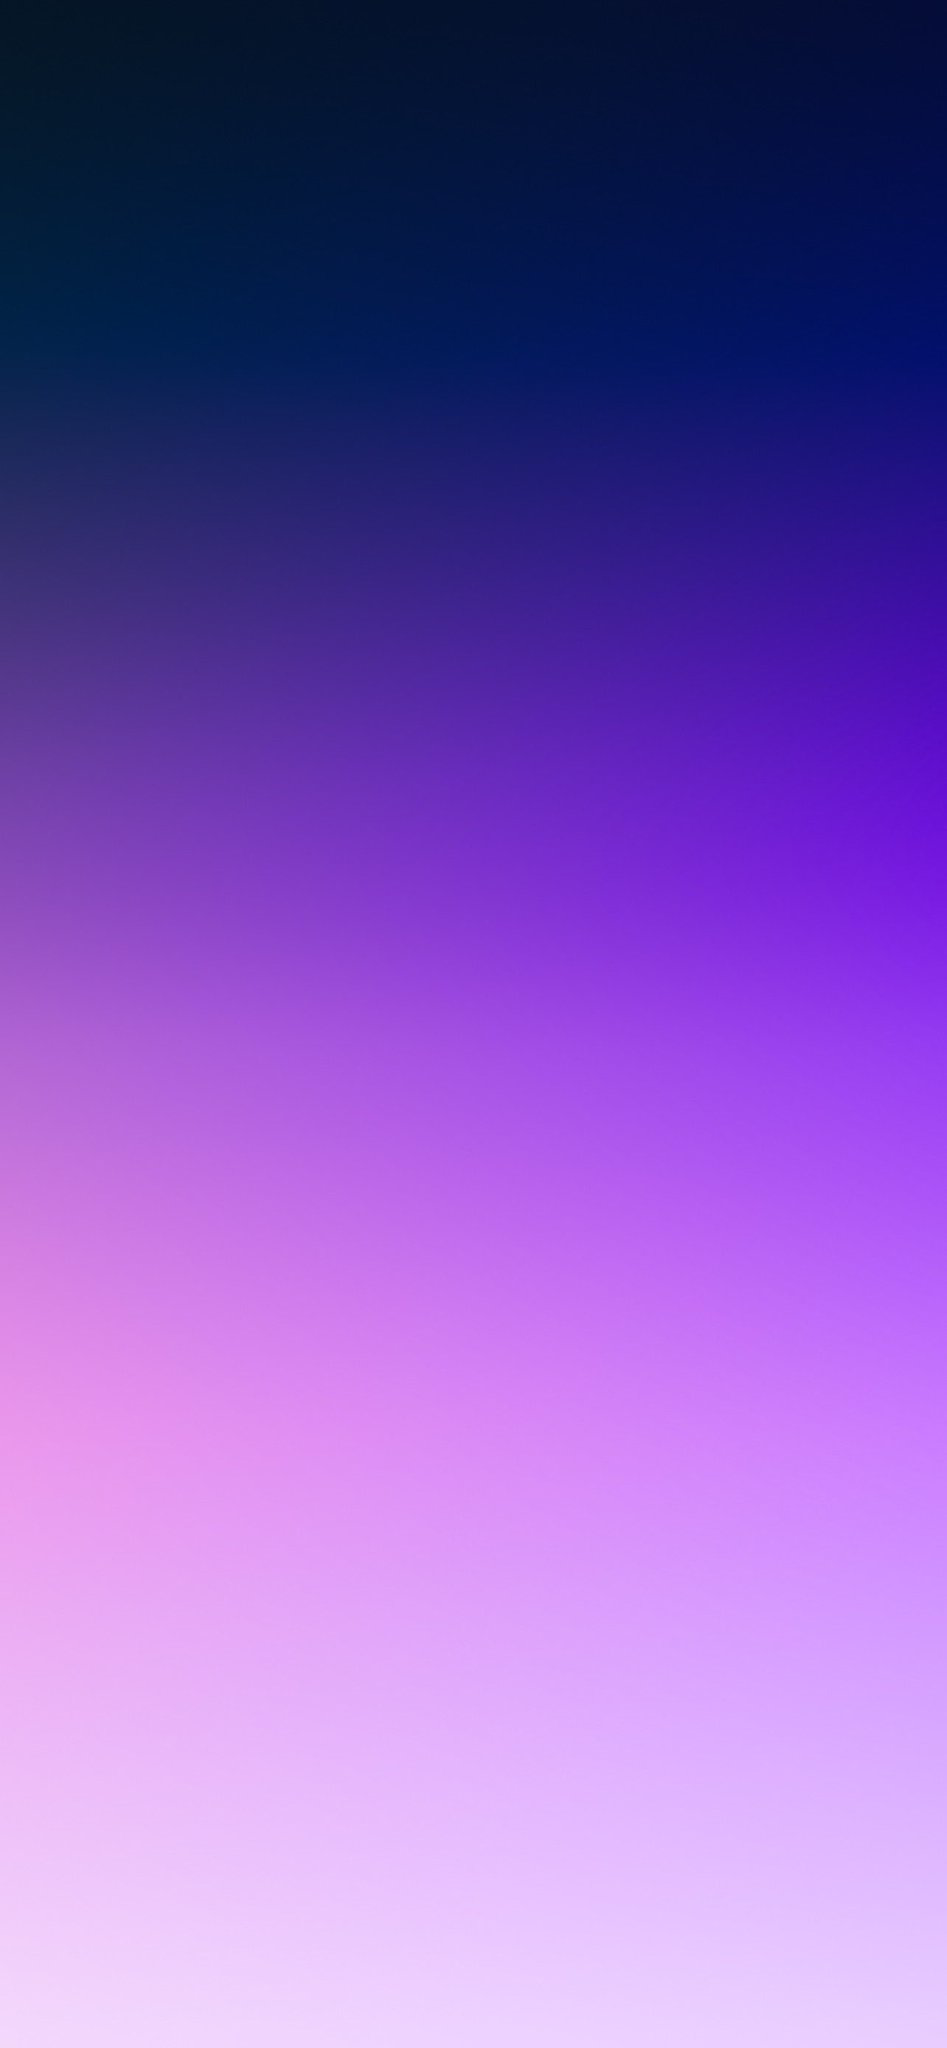 Pink Purple Background Images  Free Download on Freepik